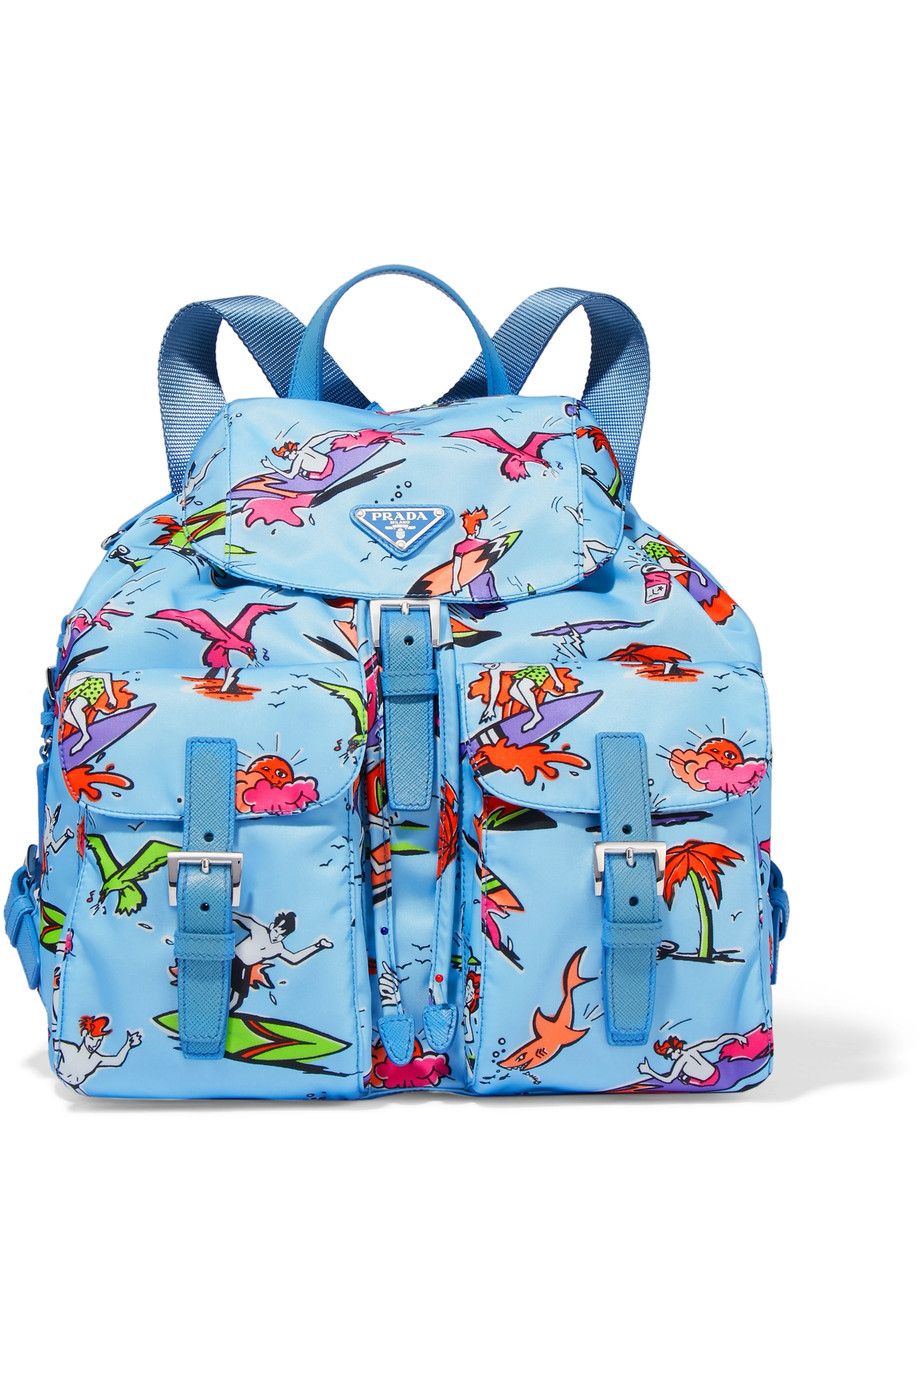 Blue, Bag, Style, Azure, Aqua, Shoulder bag, Electric blue, Luggage and bags, Backpack, Visual arts, 